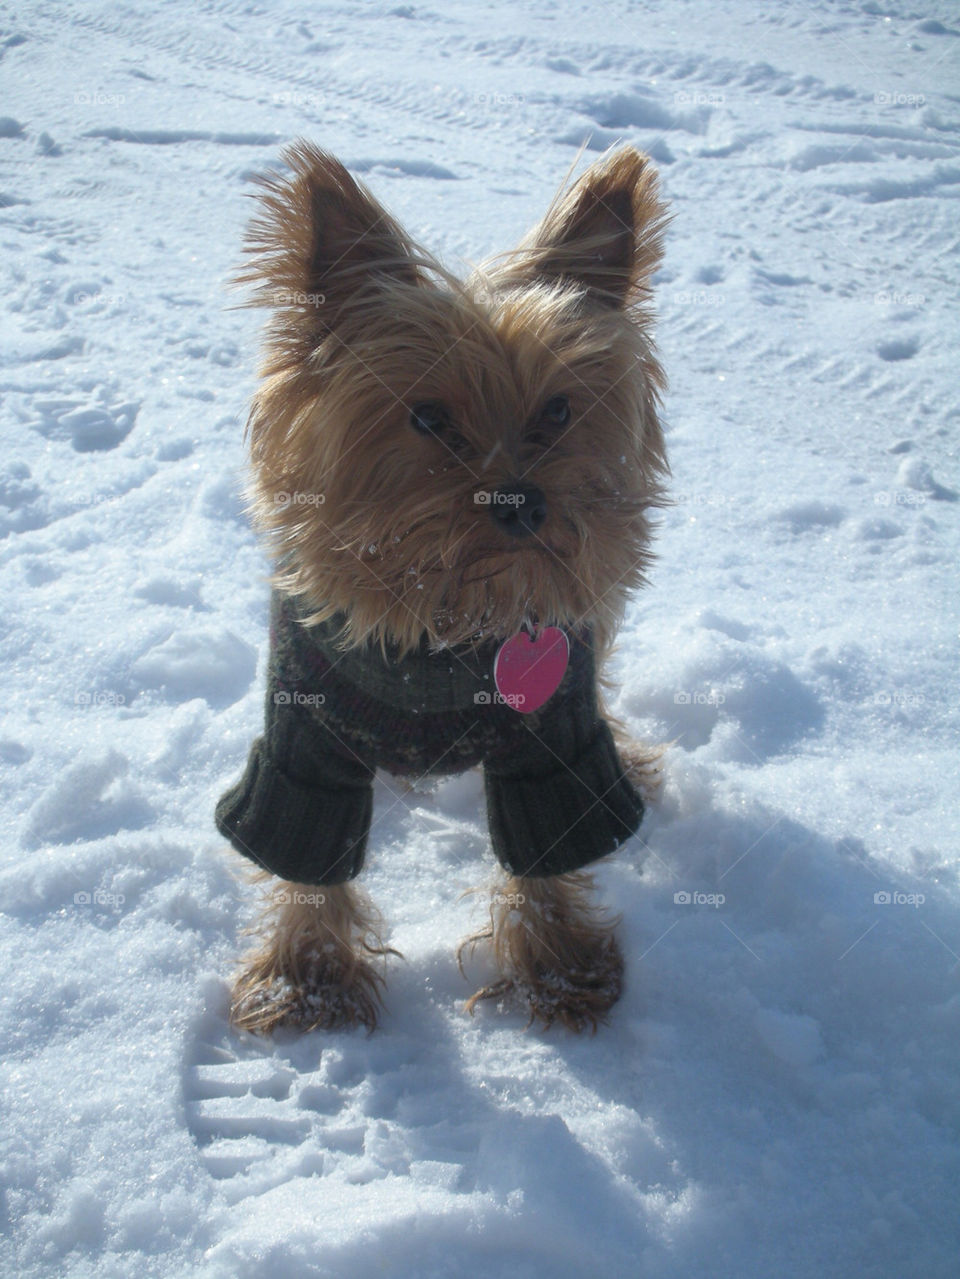 snow sun dog ice by silly_pics